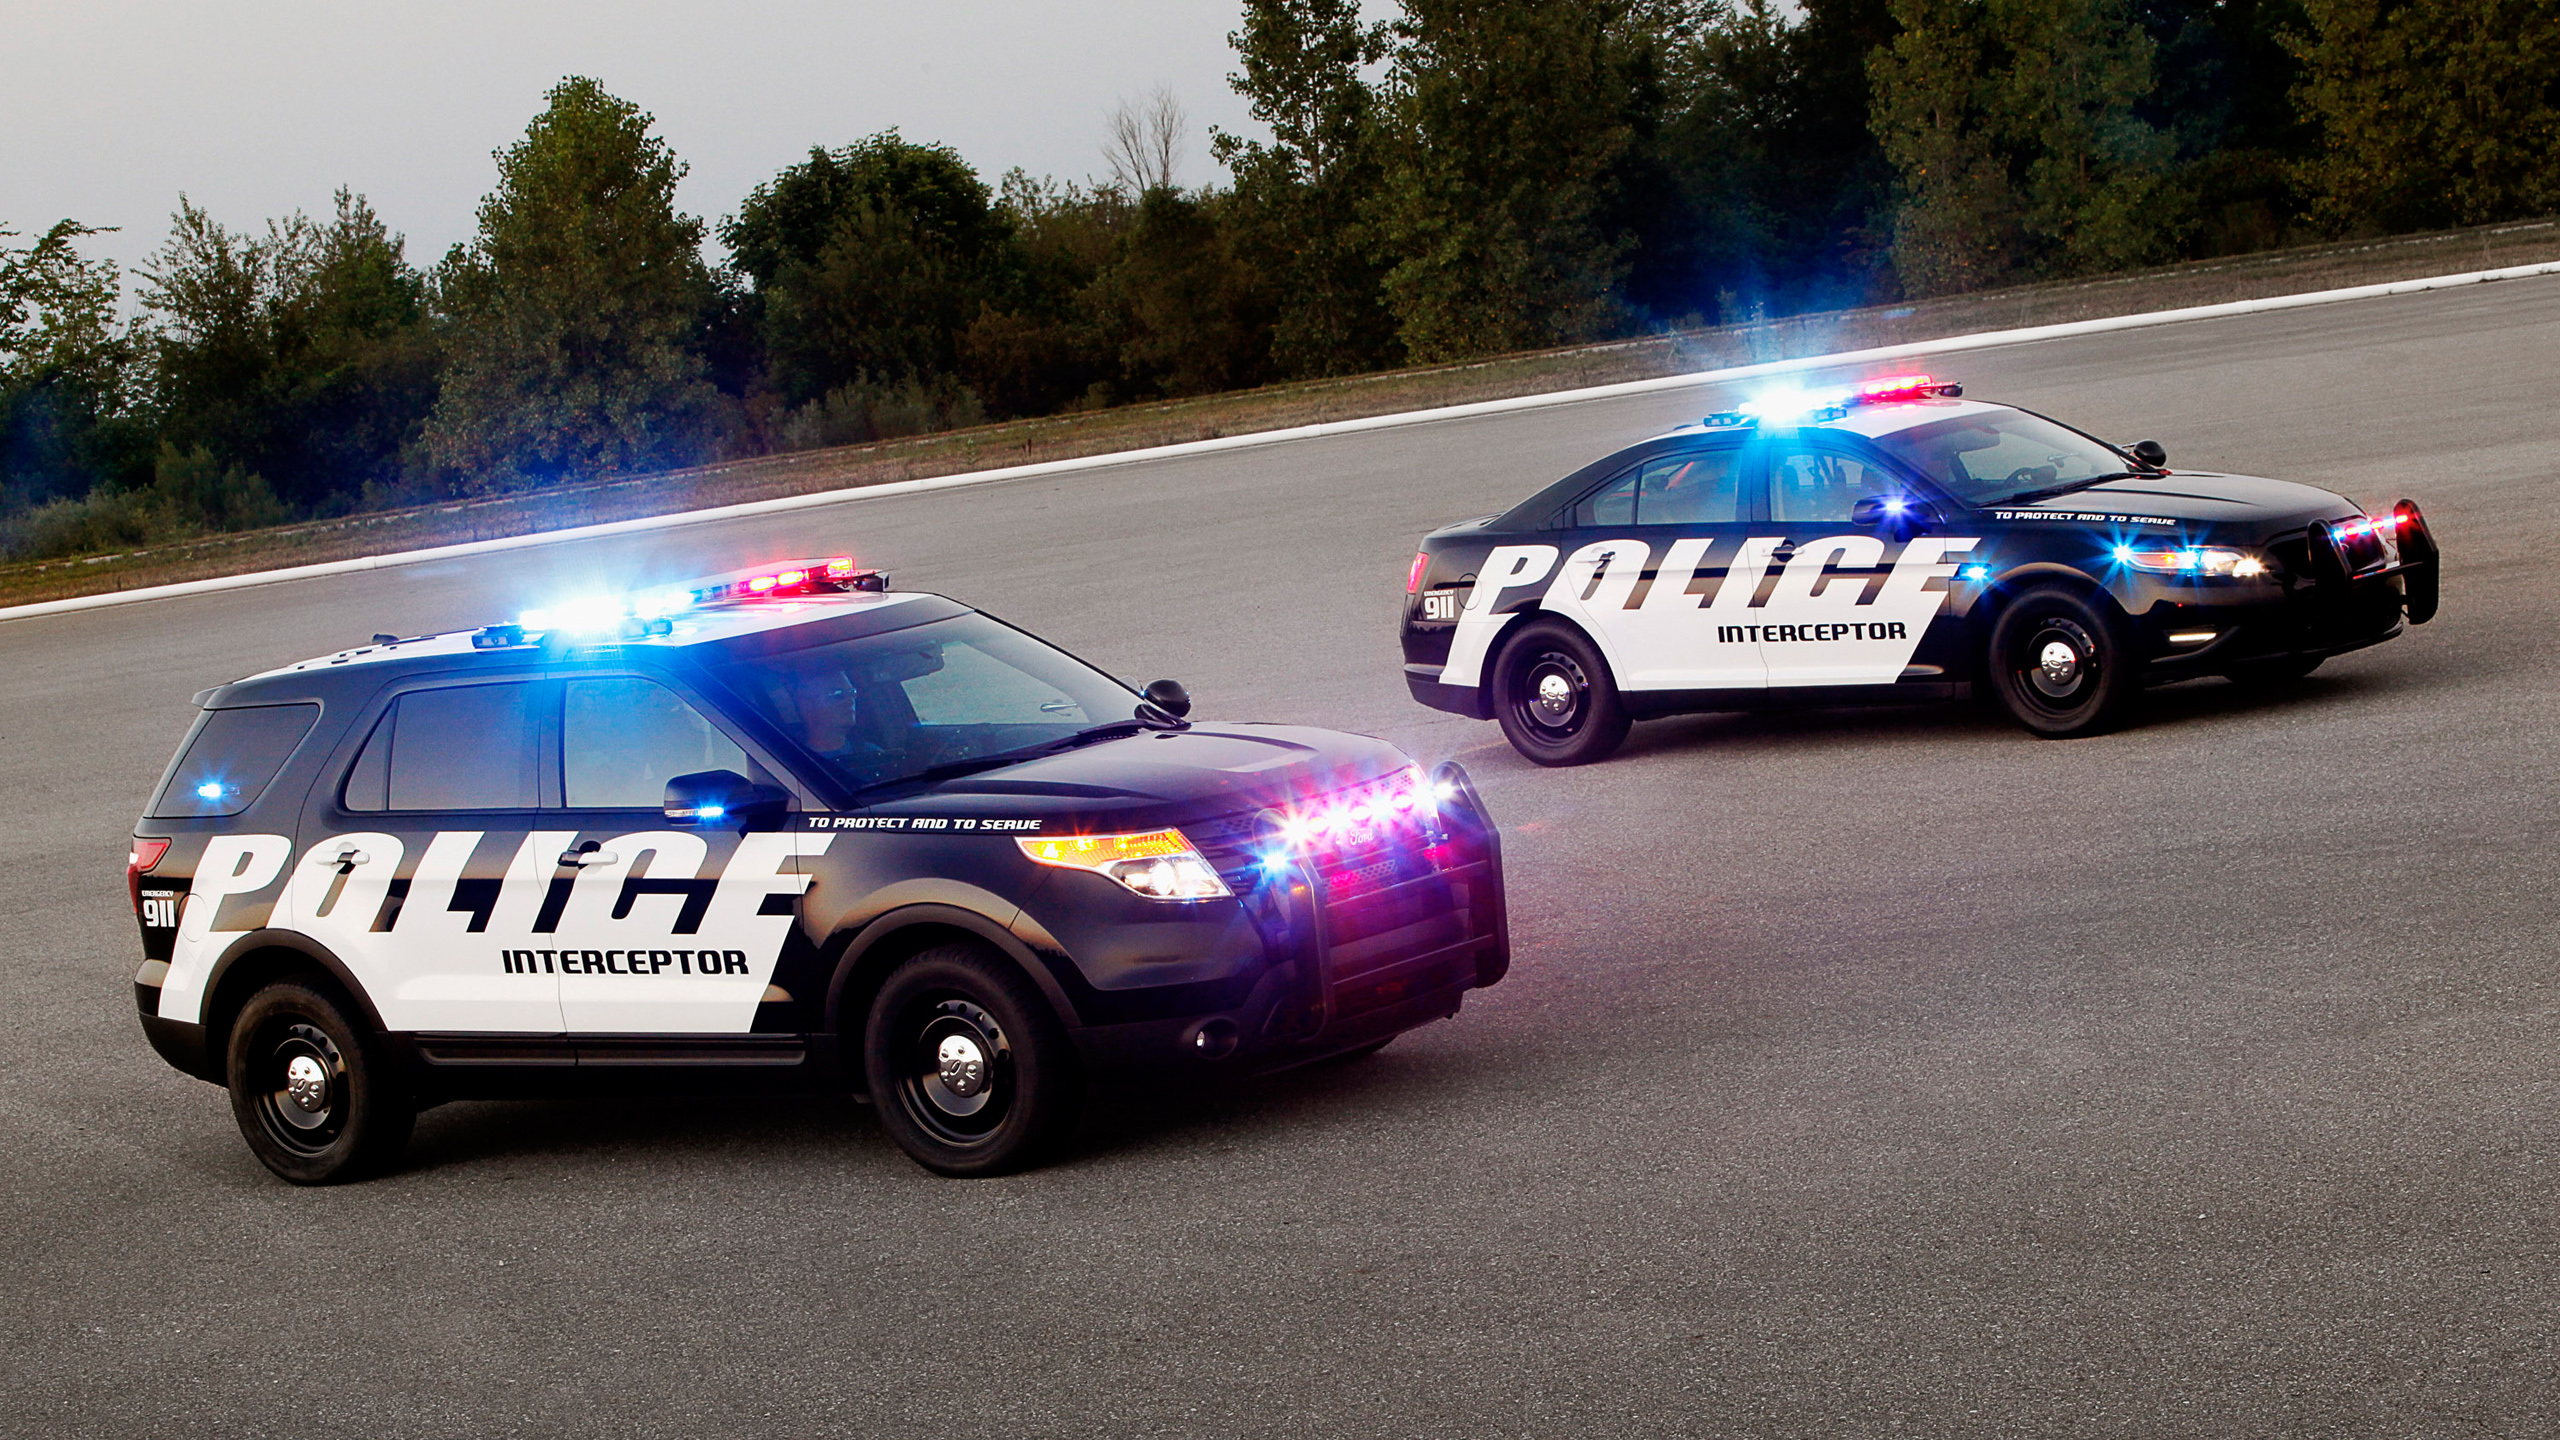 2014 Ford Police Interceptors Wallpaper HD Car Wallpapers ID 4346